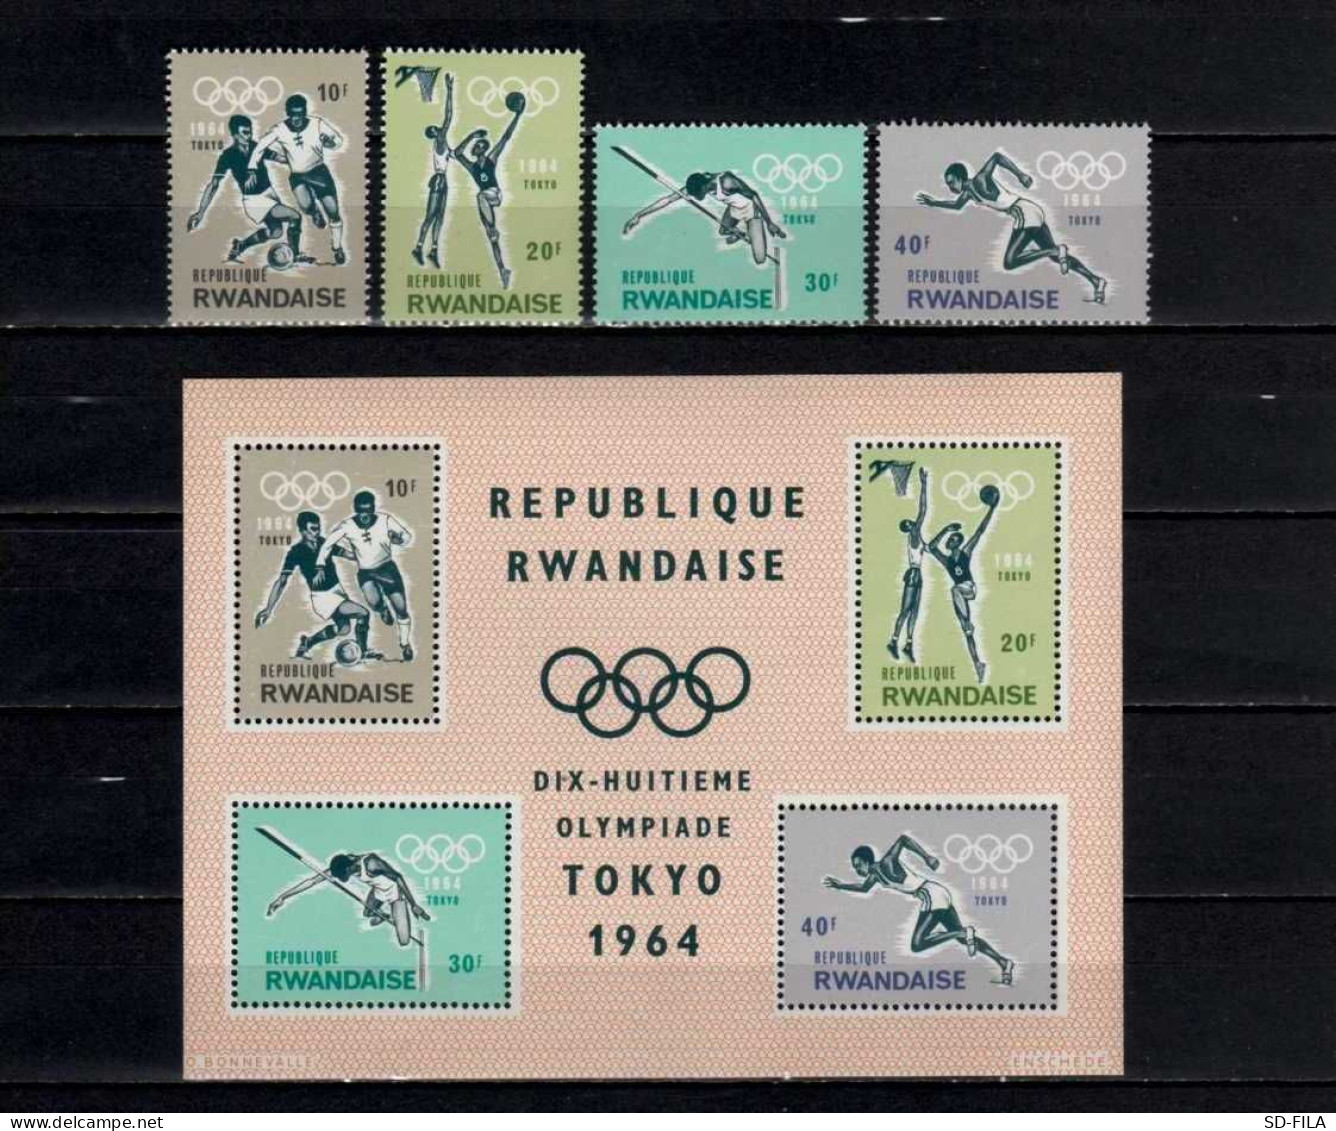 Belgian Congo - Rwanda 1964 N° 81A/82C + BL2 MNH Olympic Games - Jeux Olympique Tokio - Japan C15.00Eu. - Ungebraucht